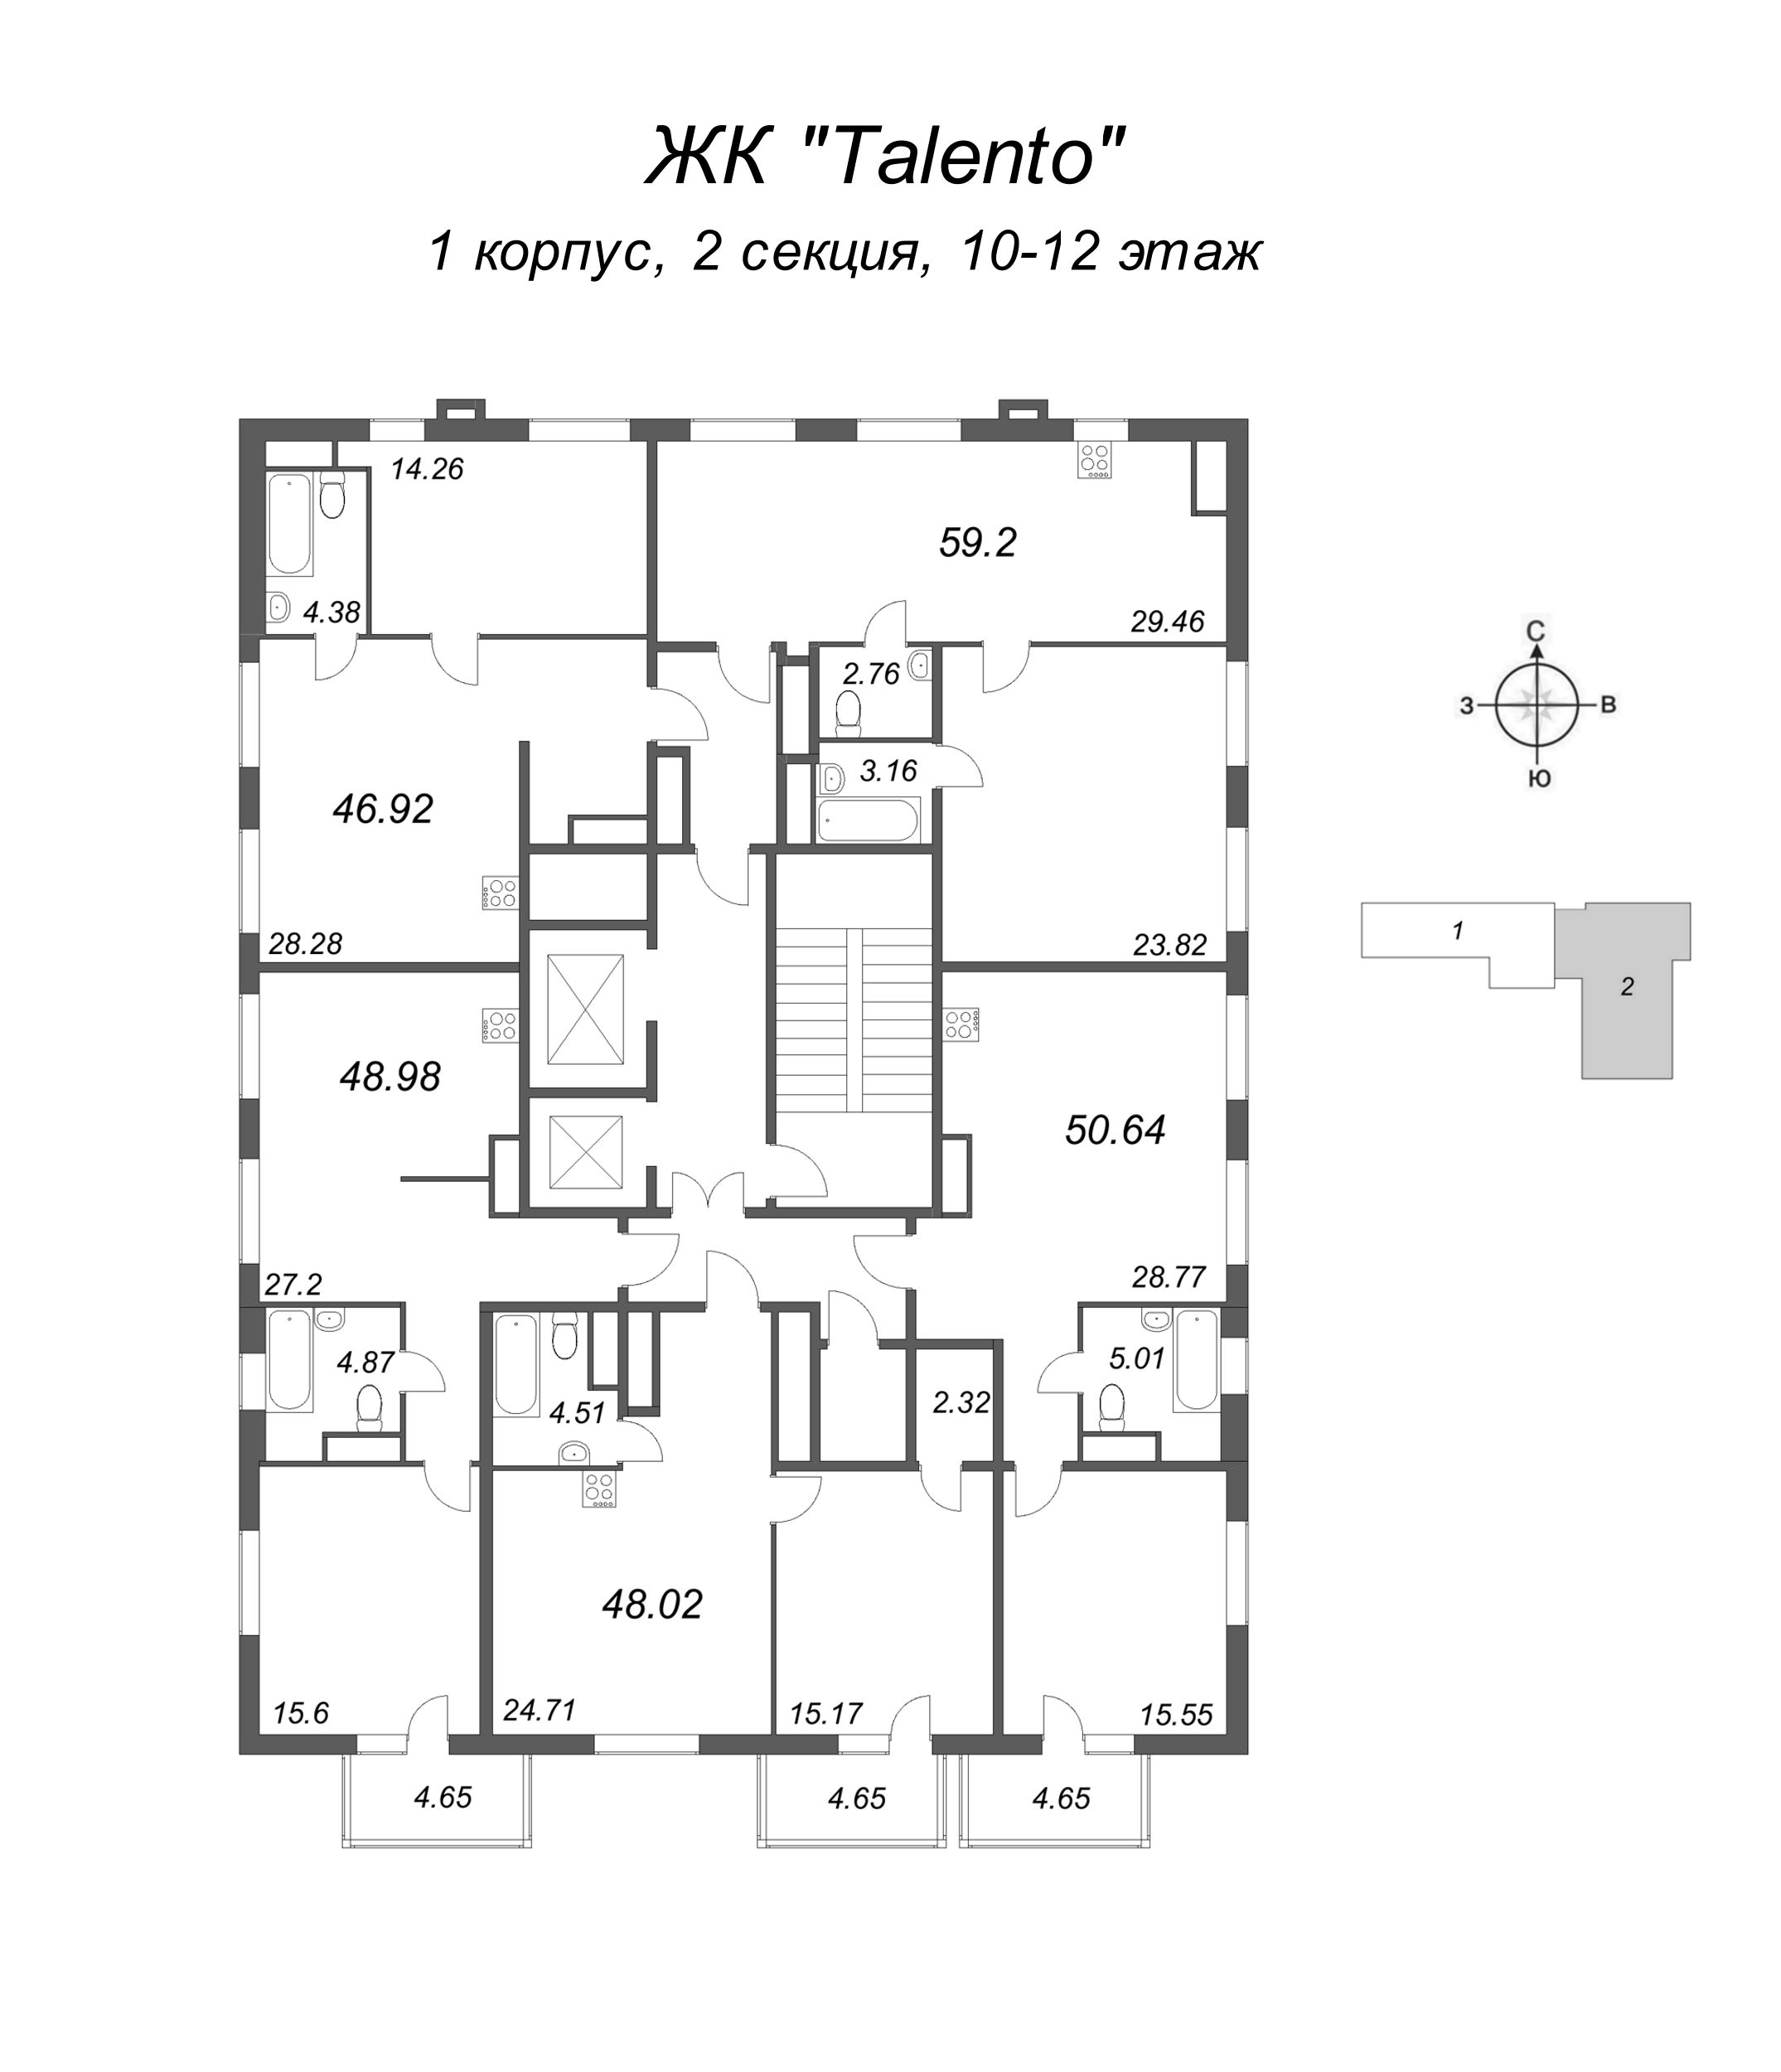 2-комнатная (Евро) квартира, 59.2 м² - планировка этажа